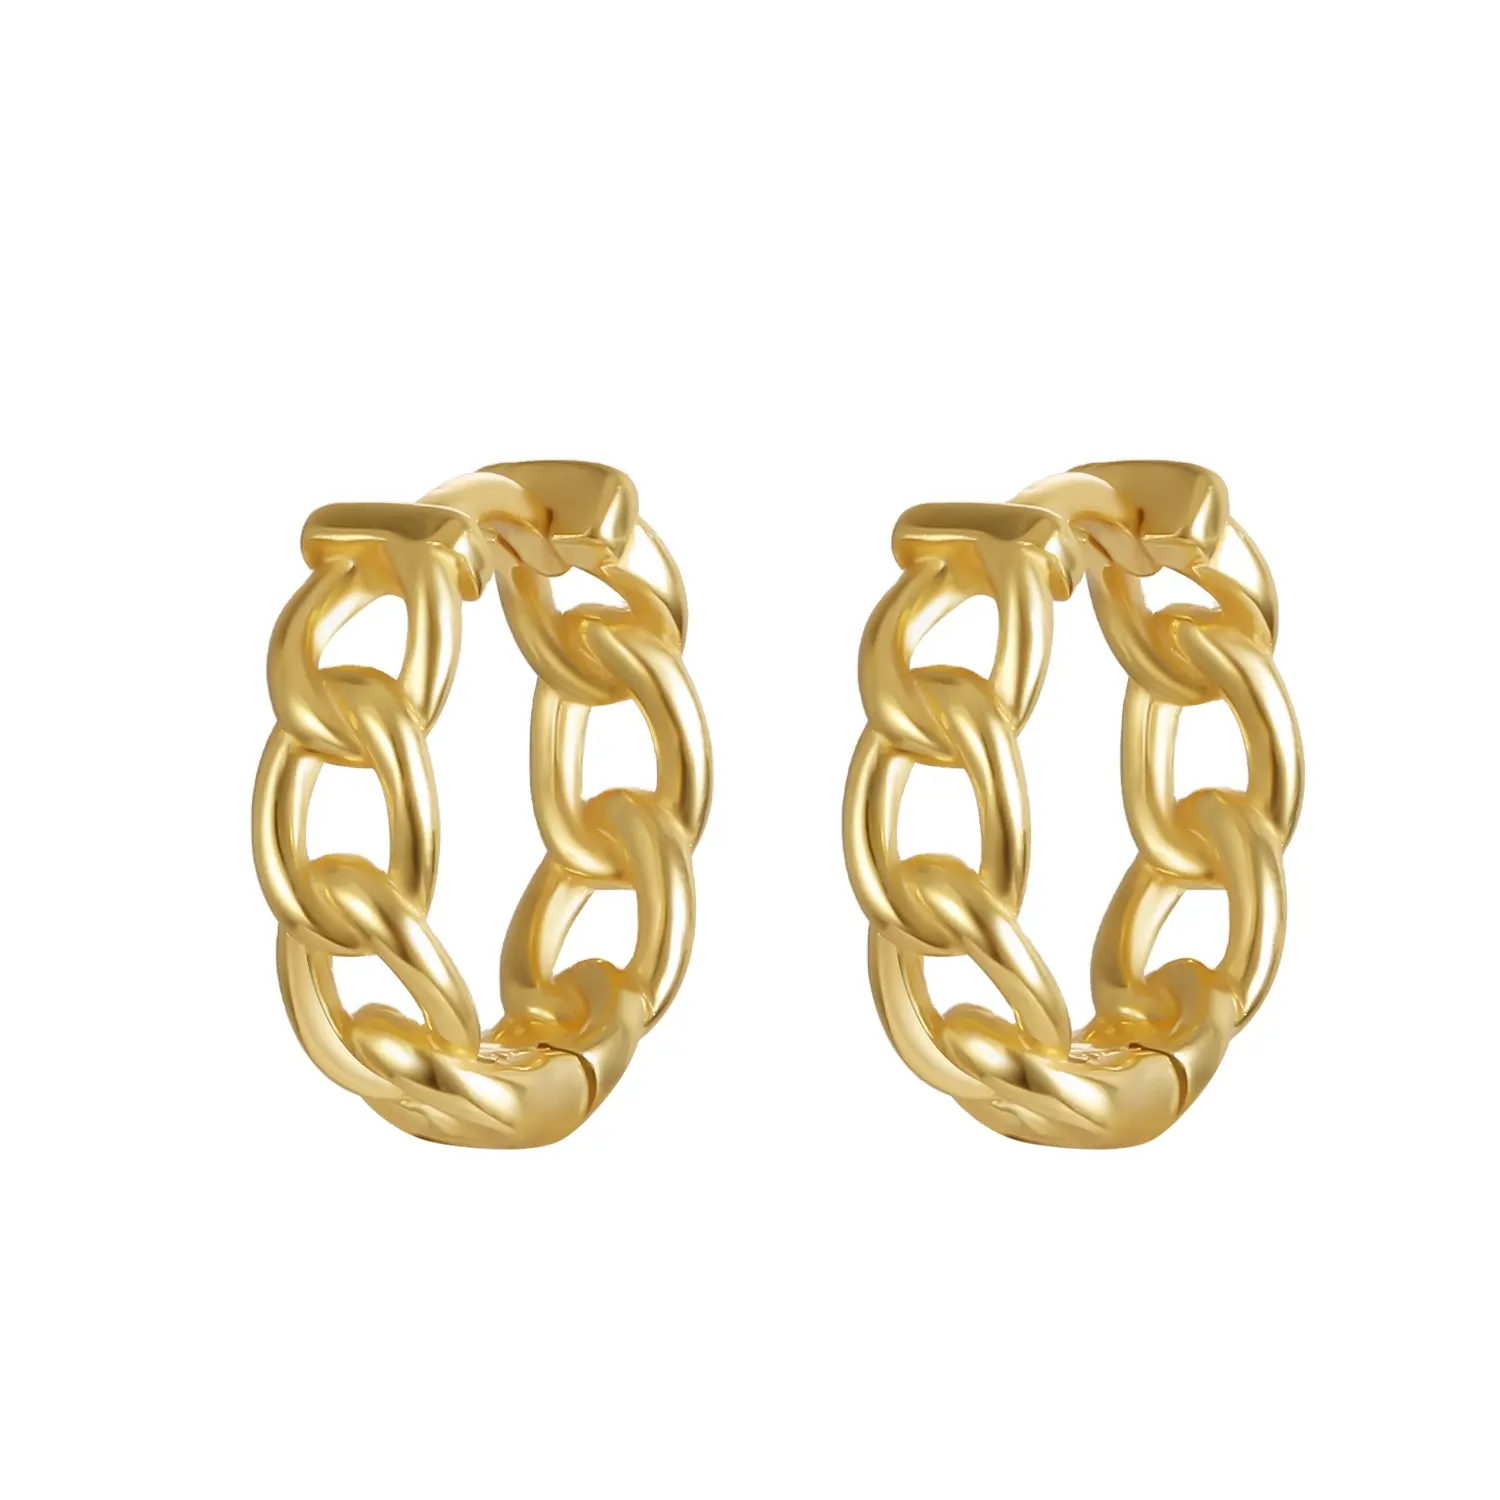 2022 Fine Jewelry 925 Sterling Silver Earrings Fashion Link Chain Charms 18k Gold Plated Hoop Earrings for Women